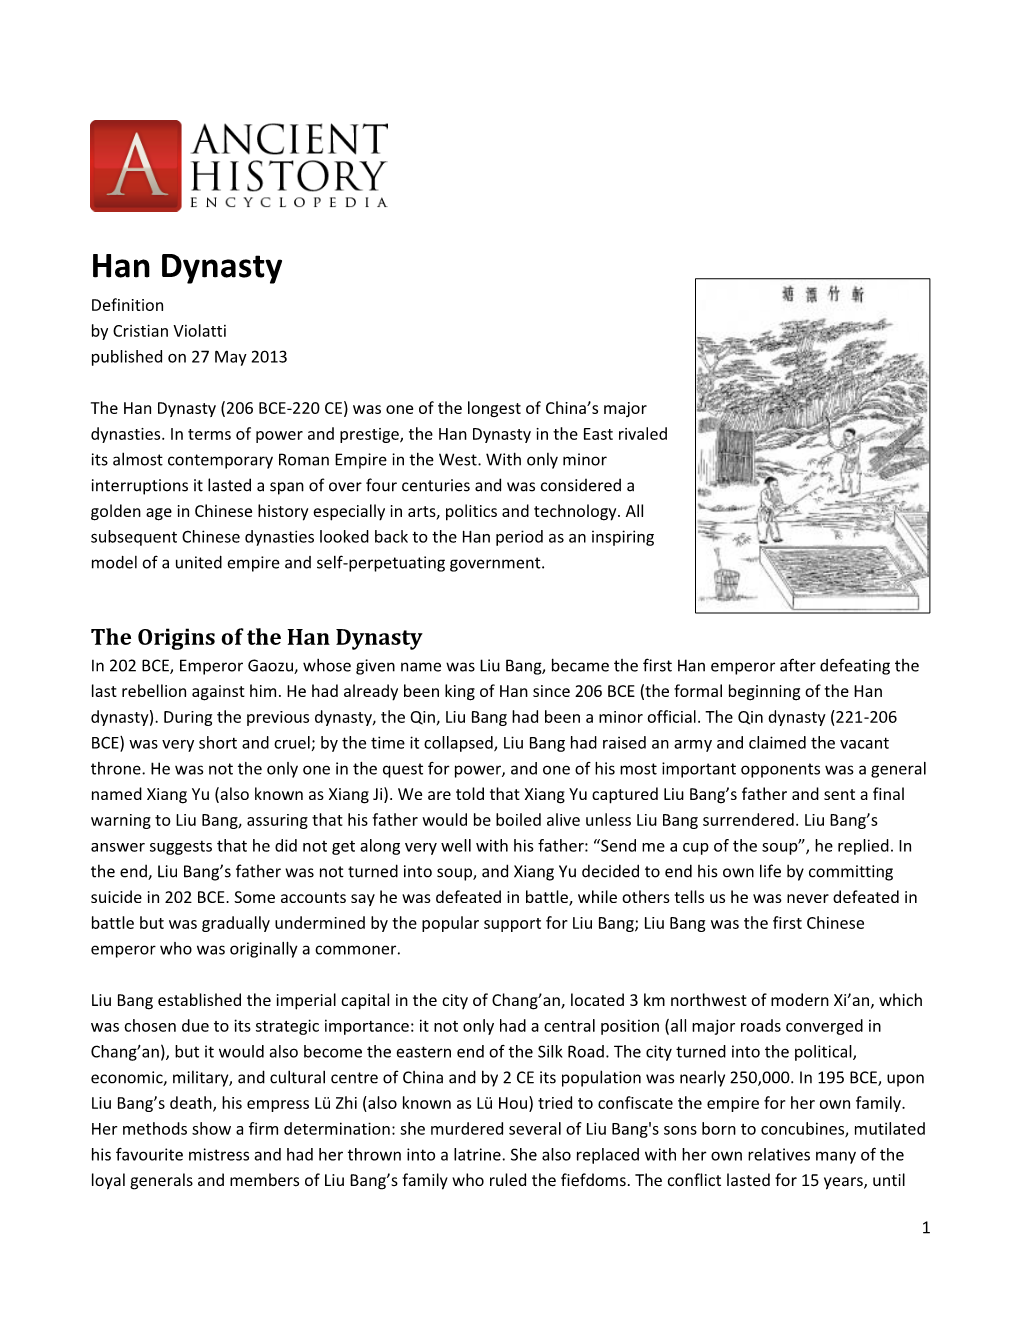 Han Dynasty Definition by Cristian Violatti Published on 27 May 2013